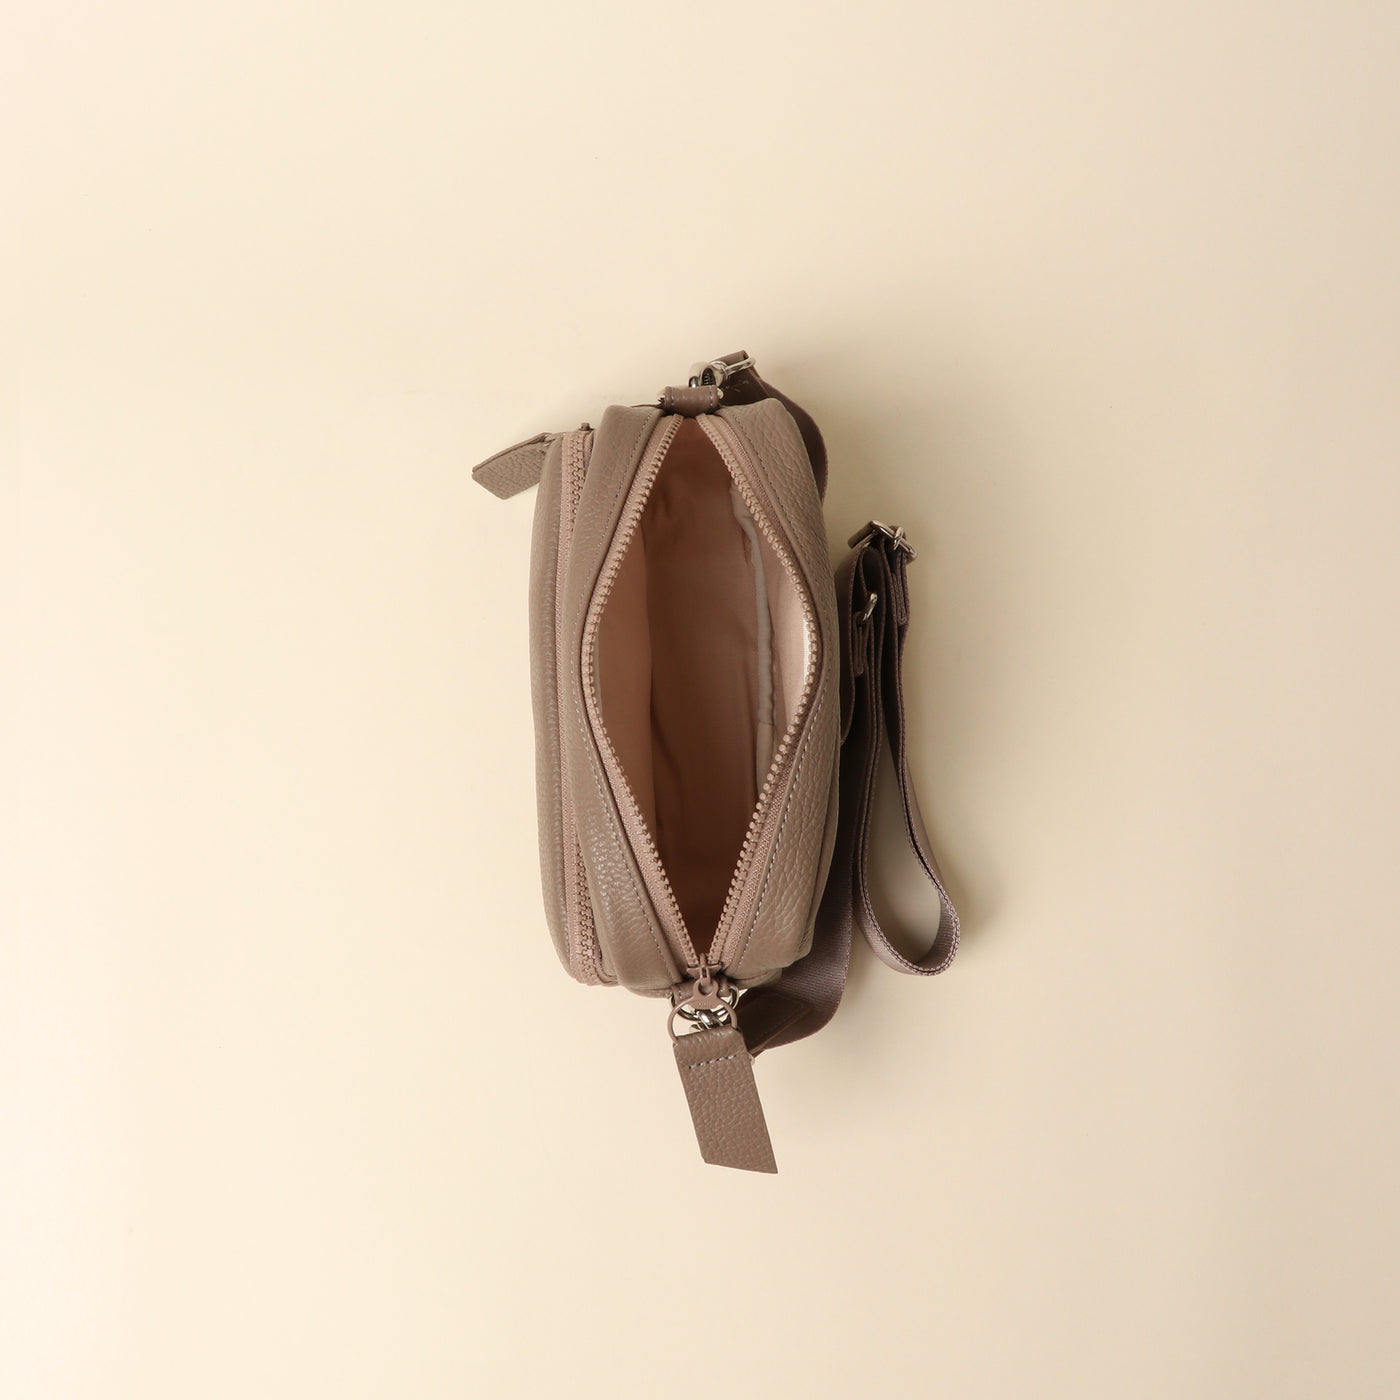 <itten-itten> Leather mini shoulder bag / pink